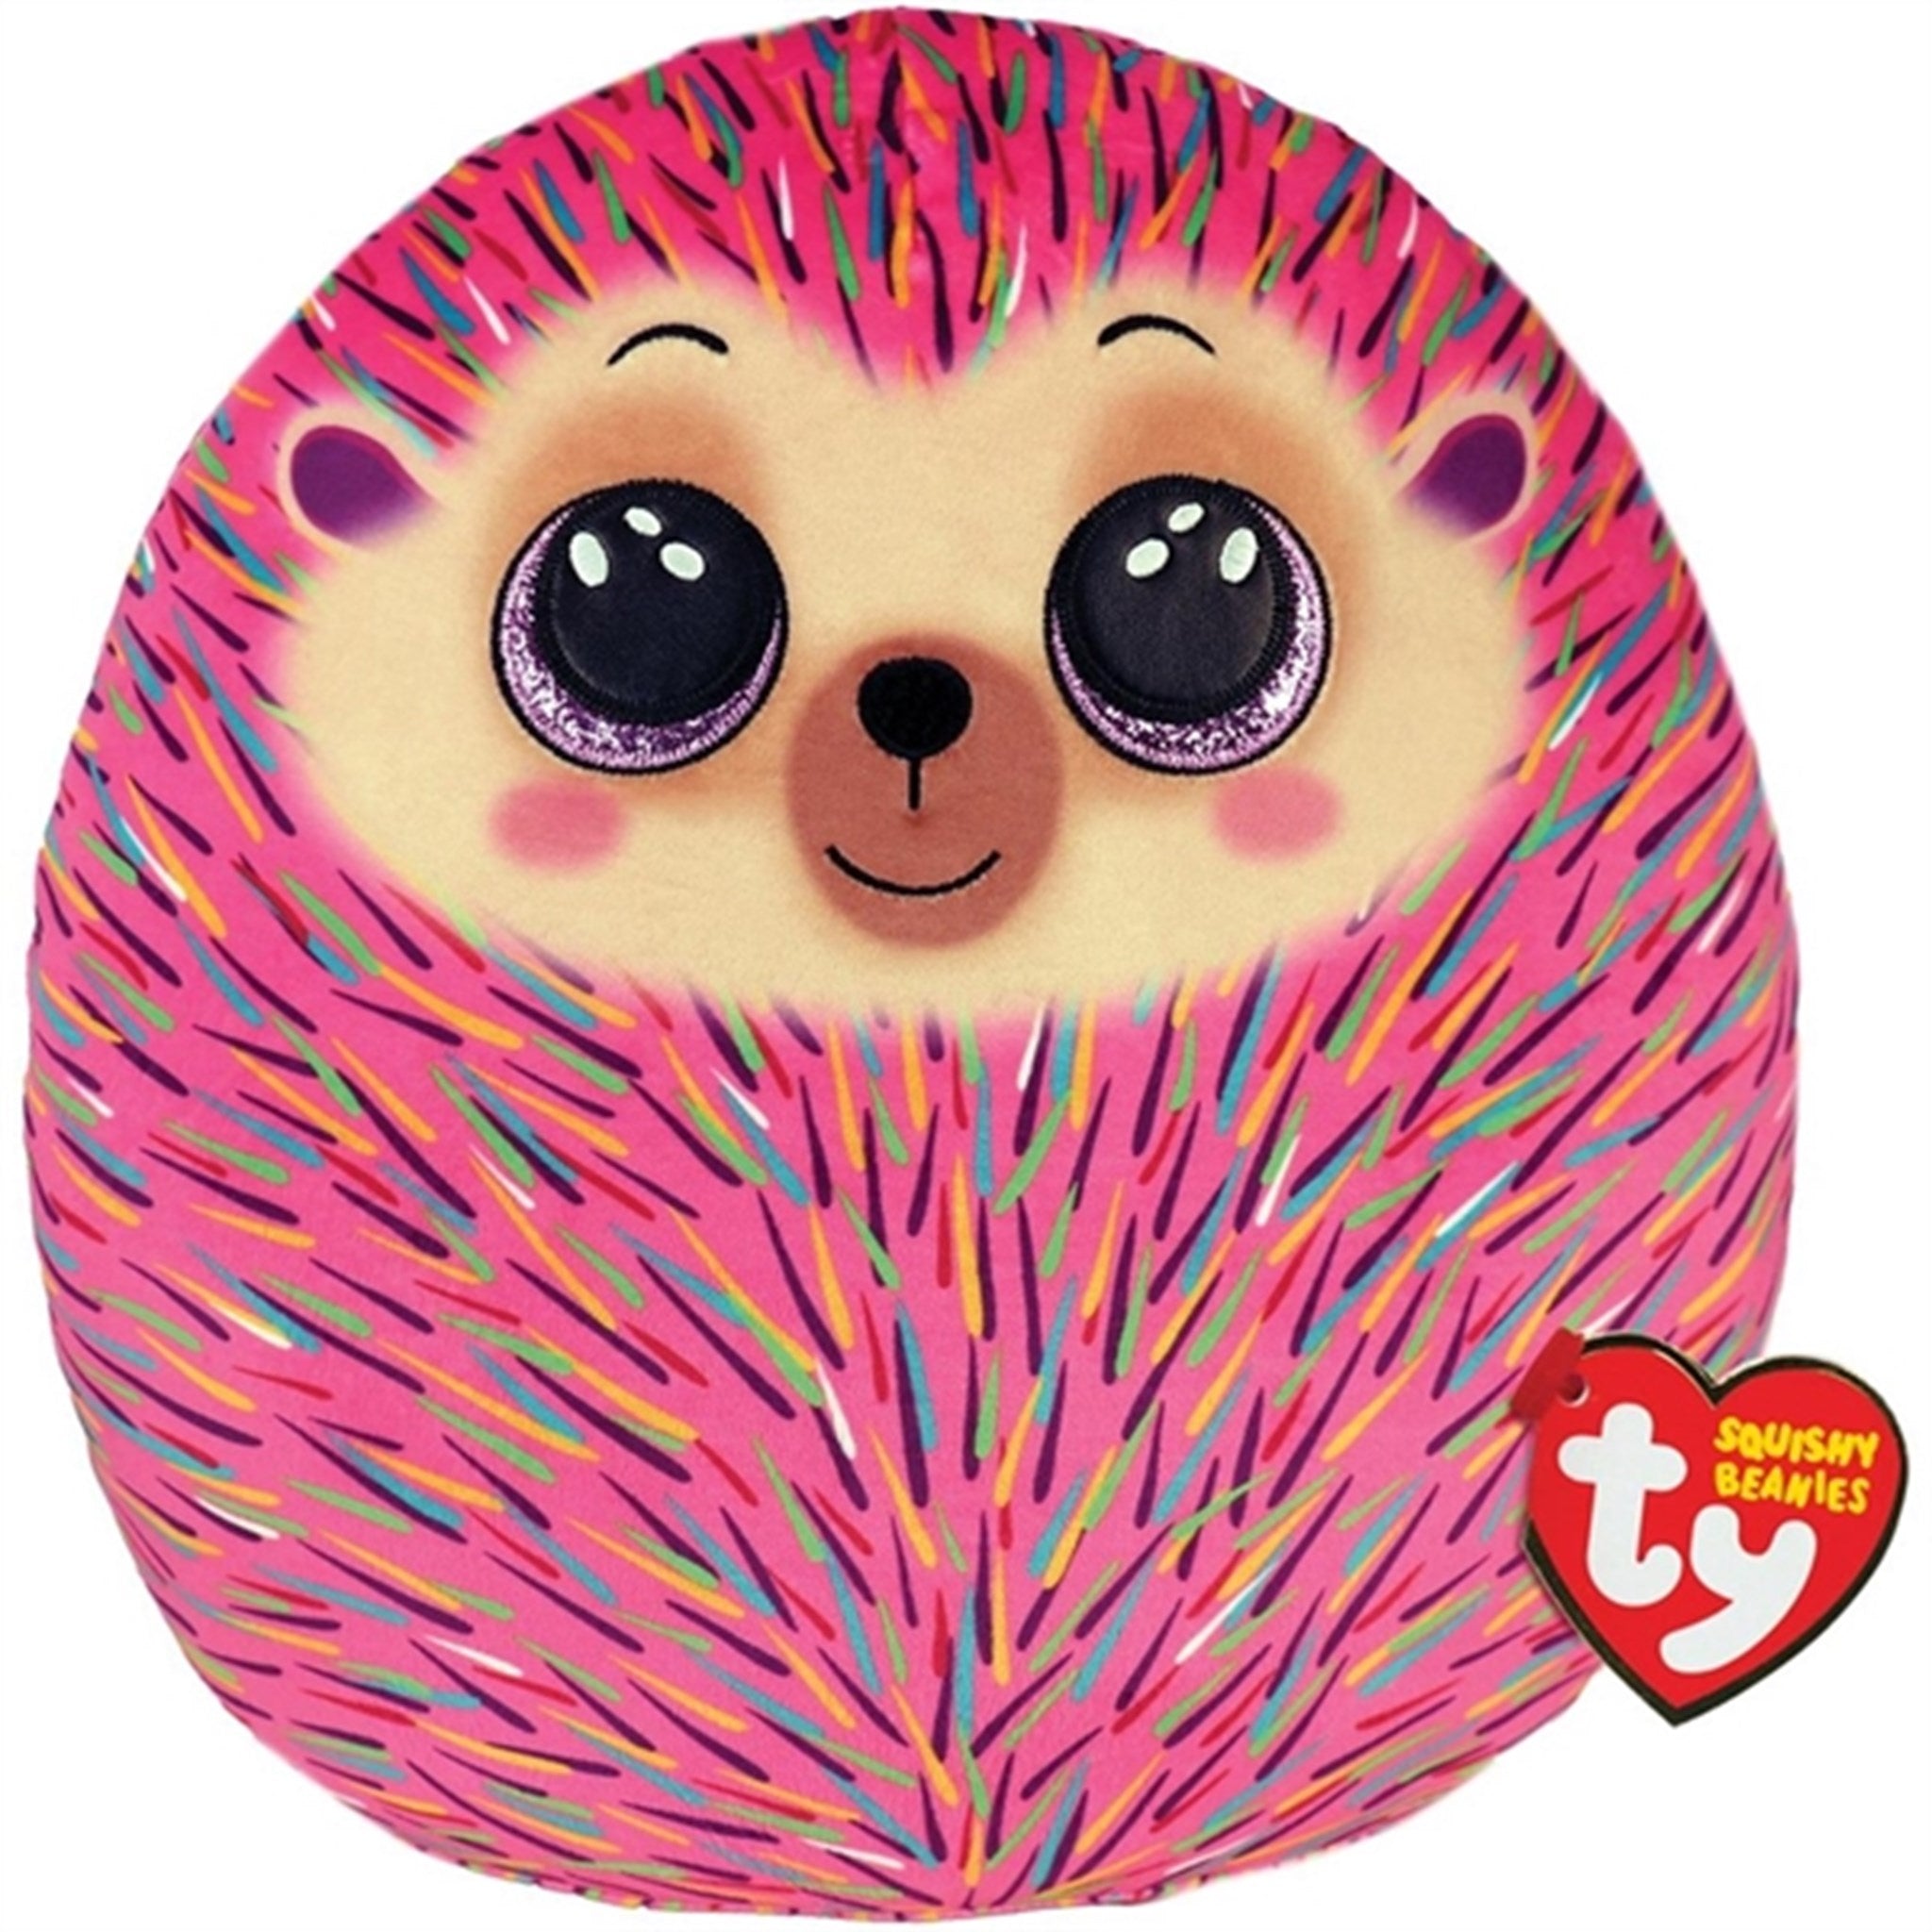 TY Squishy Beanies Hildee - Hedgehog Squish 35cm